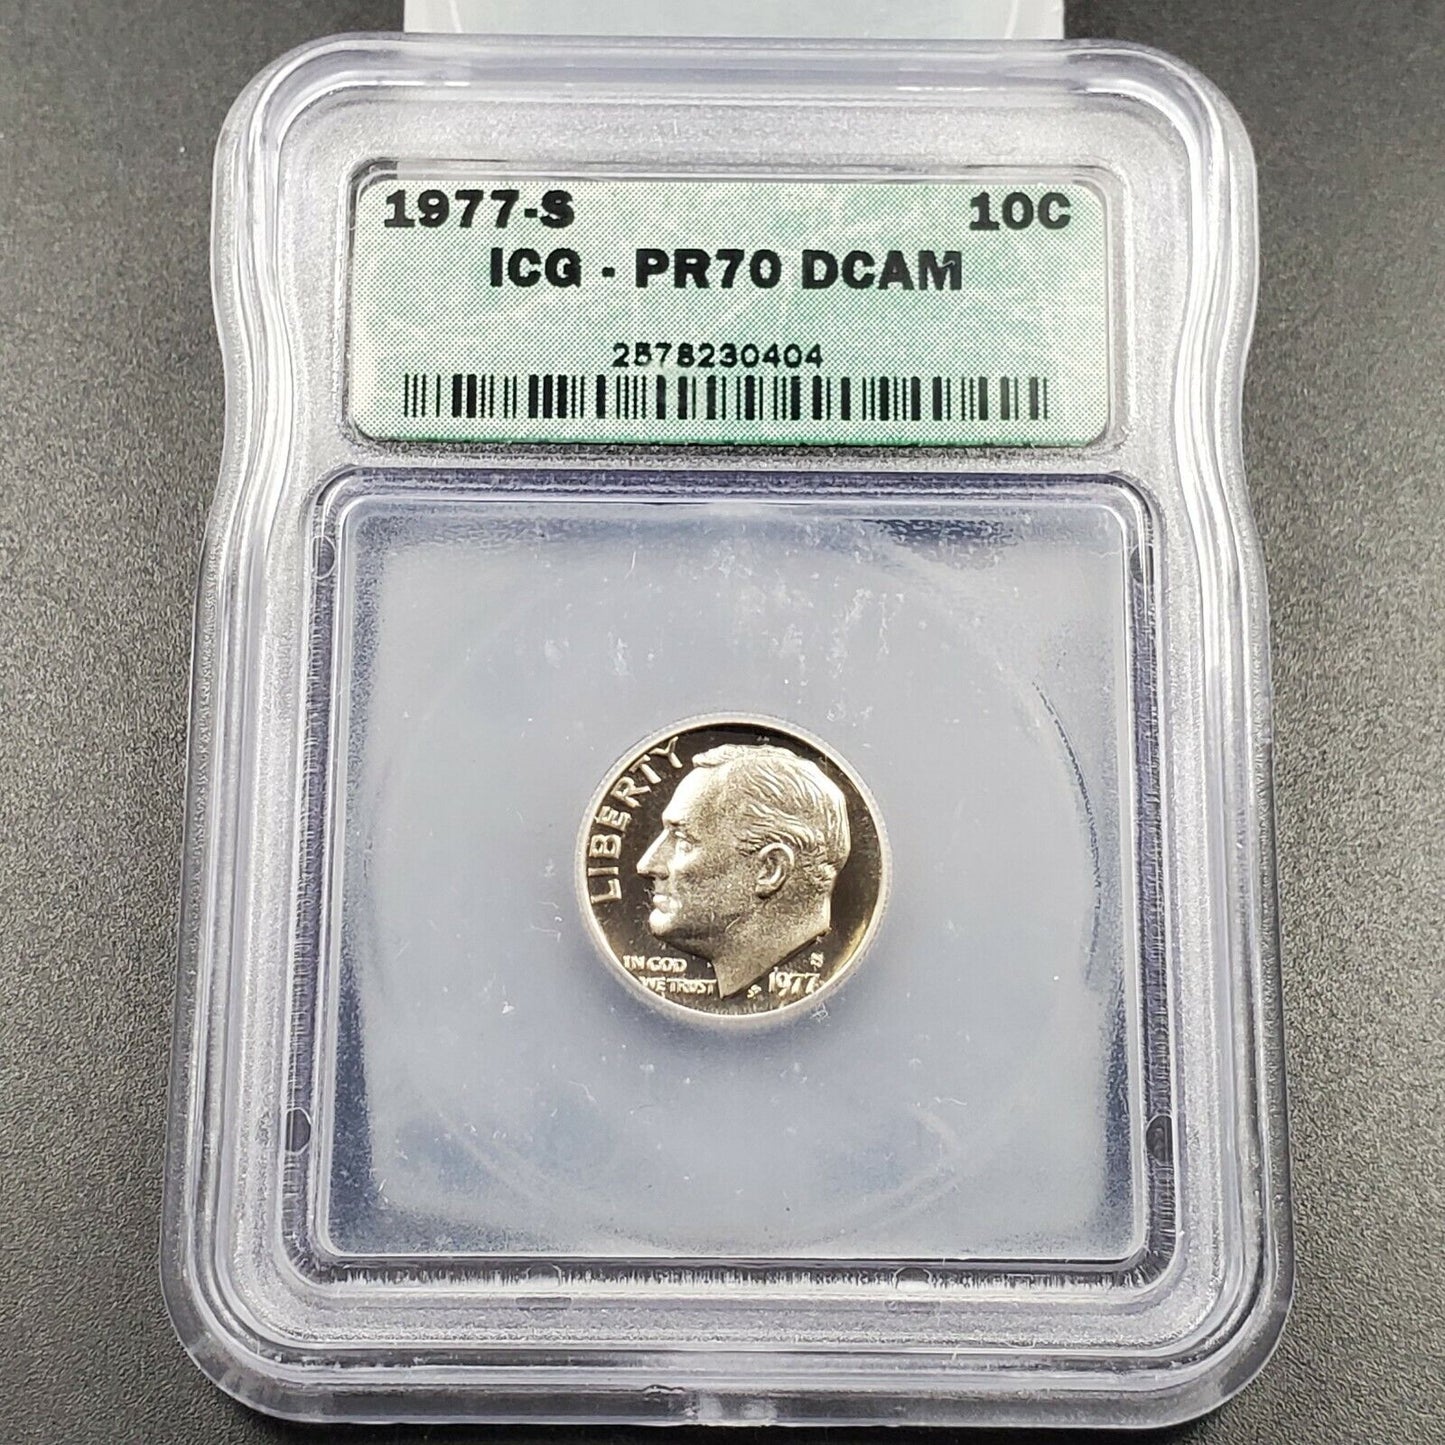 1977 S Roosevelt Clad Dime Coin Vintage ICG PR70 DCAM Deep Cameo Proof